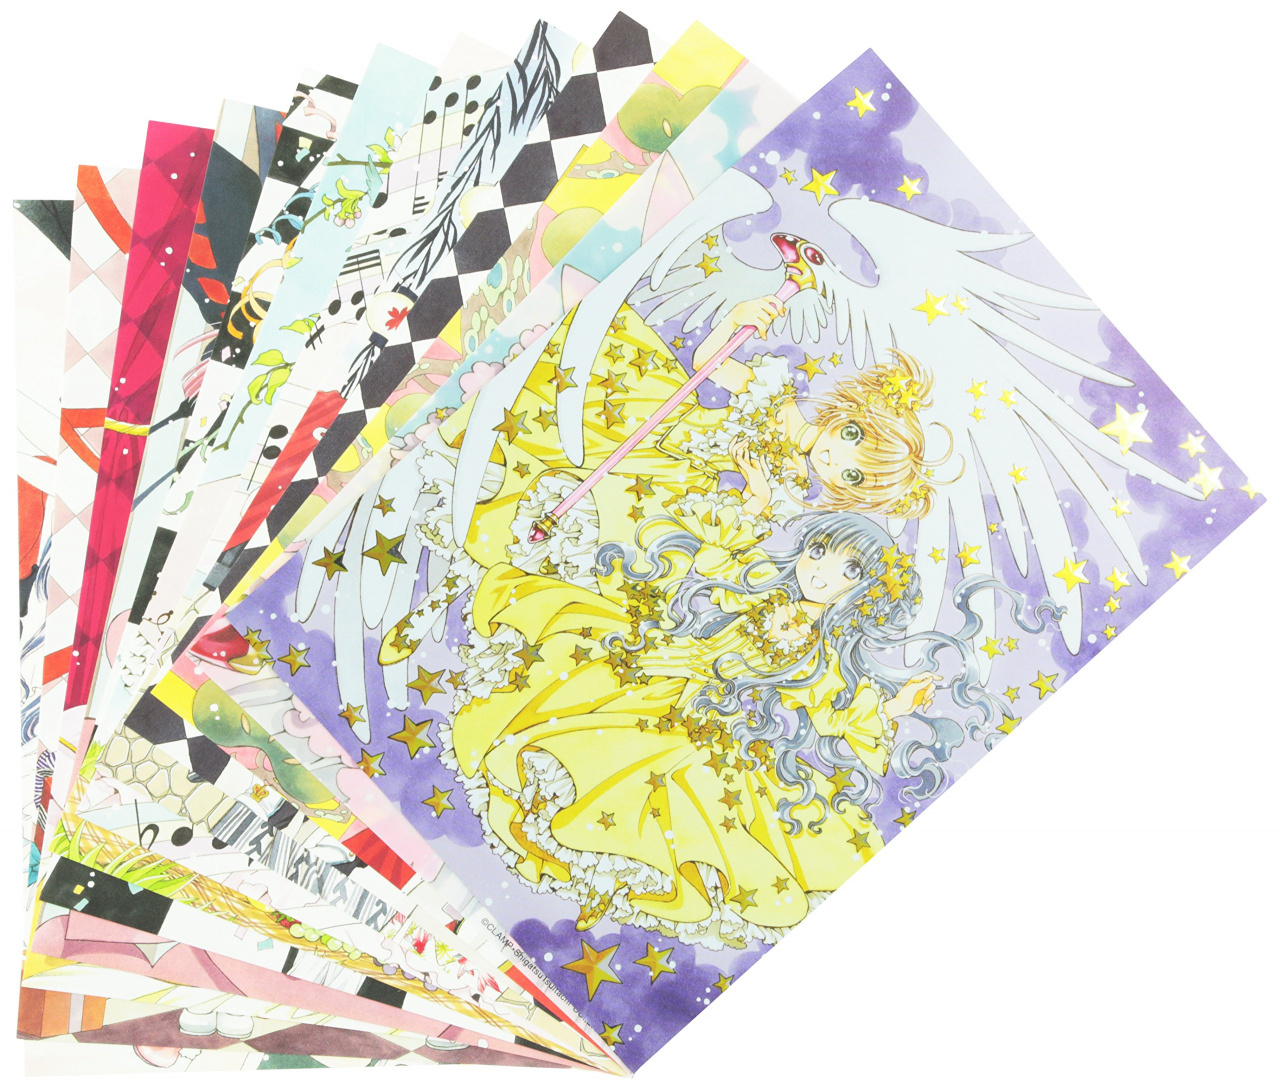 Nakayoshi 60 Shunen Kinen Ban Cardcaptor Sakura なかよし60周年記念版 カードキャプターさくら 9 Sion Bu Ik Ilote 5